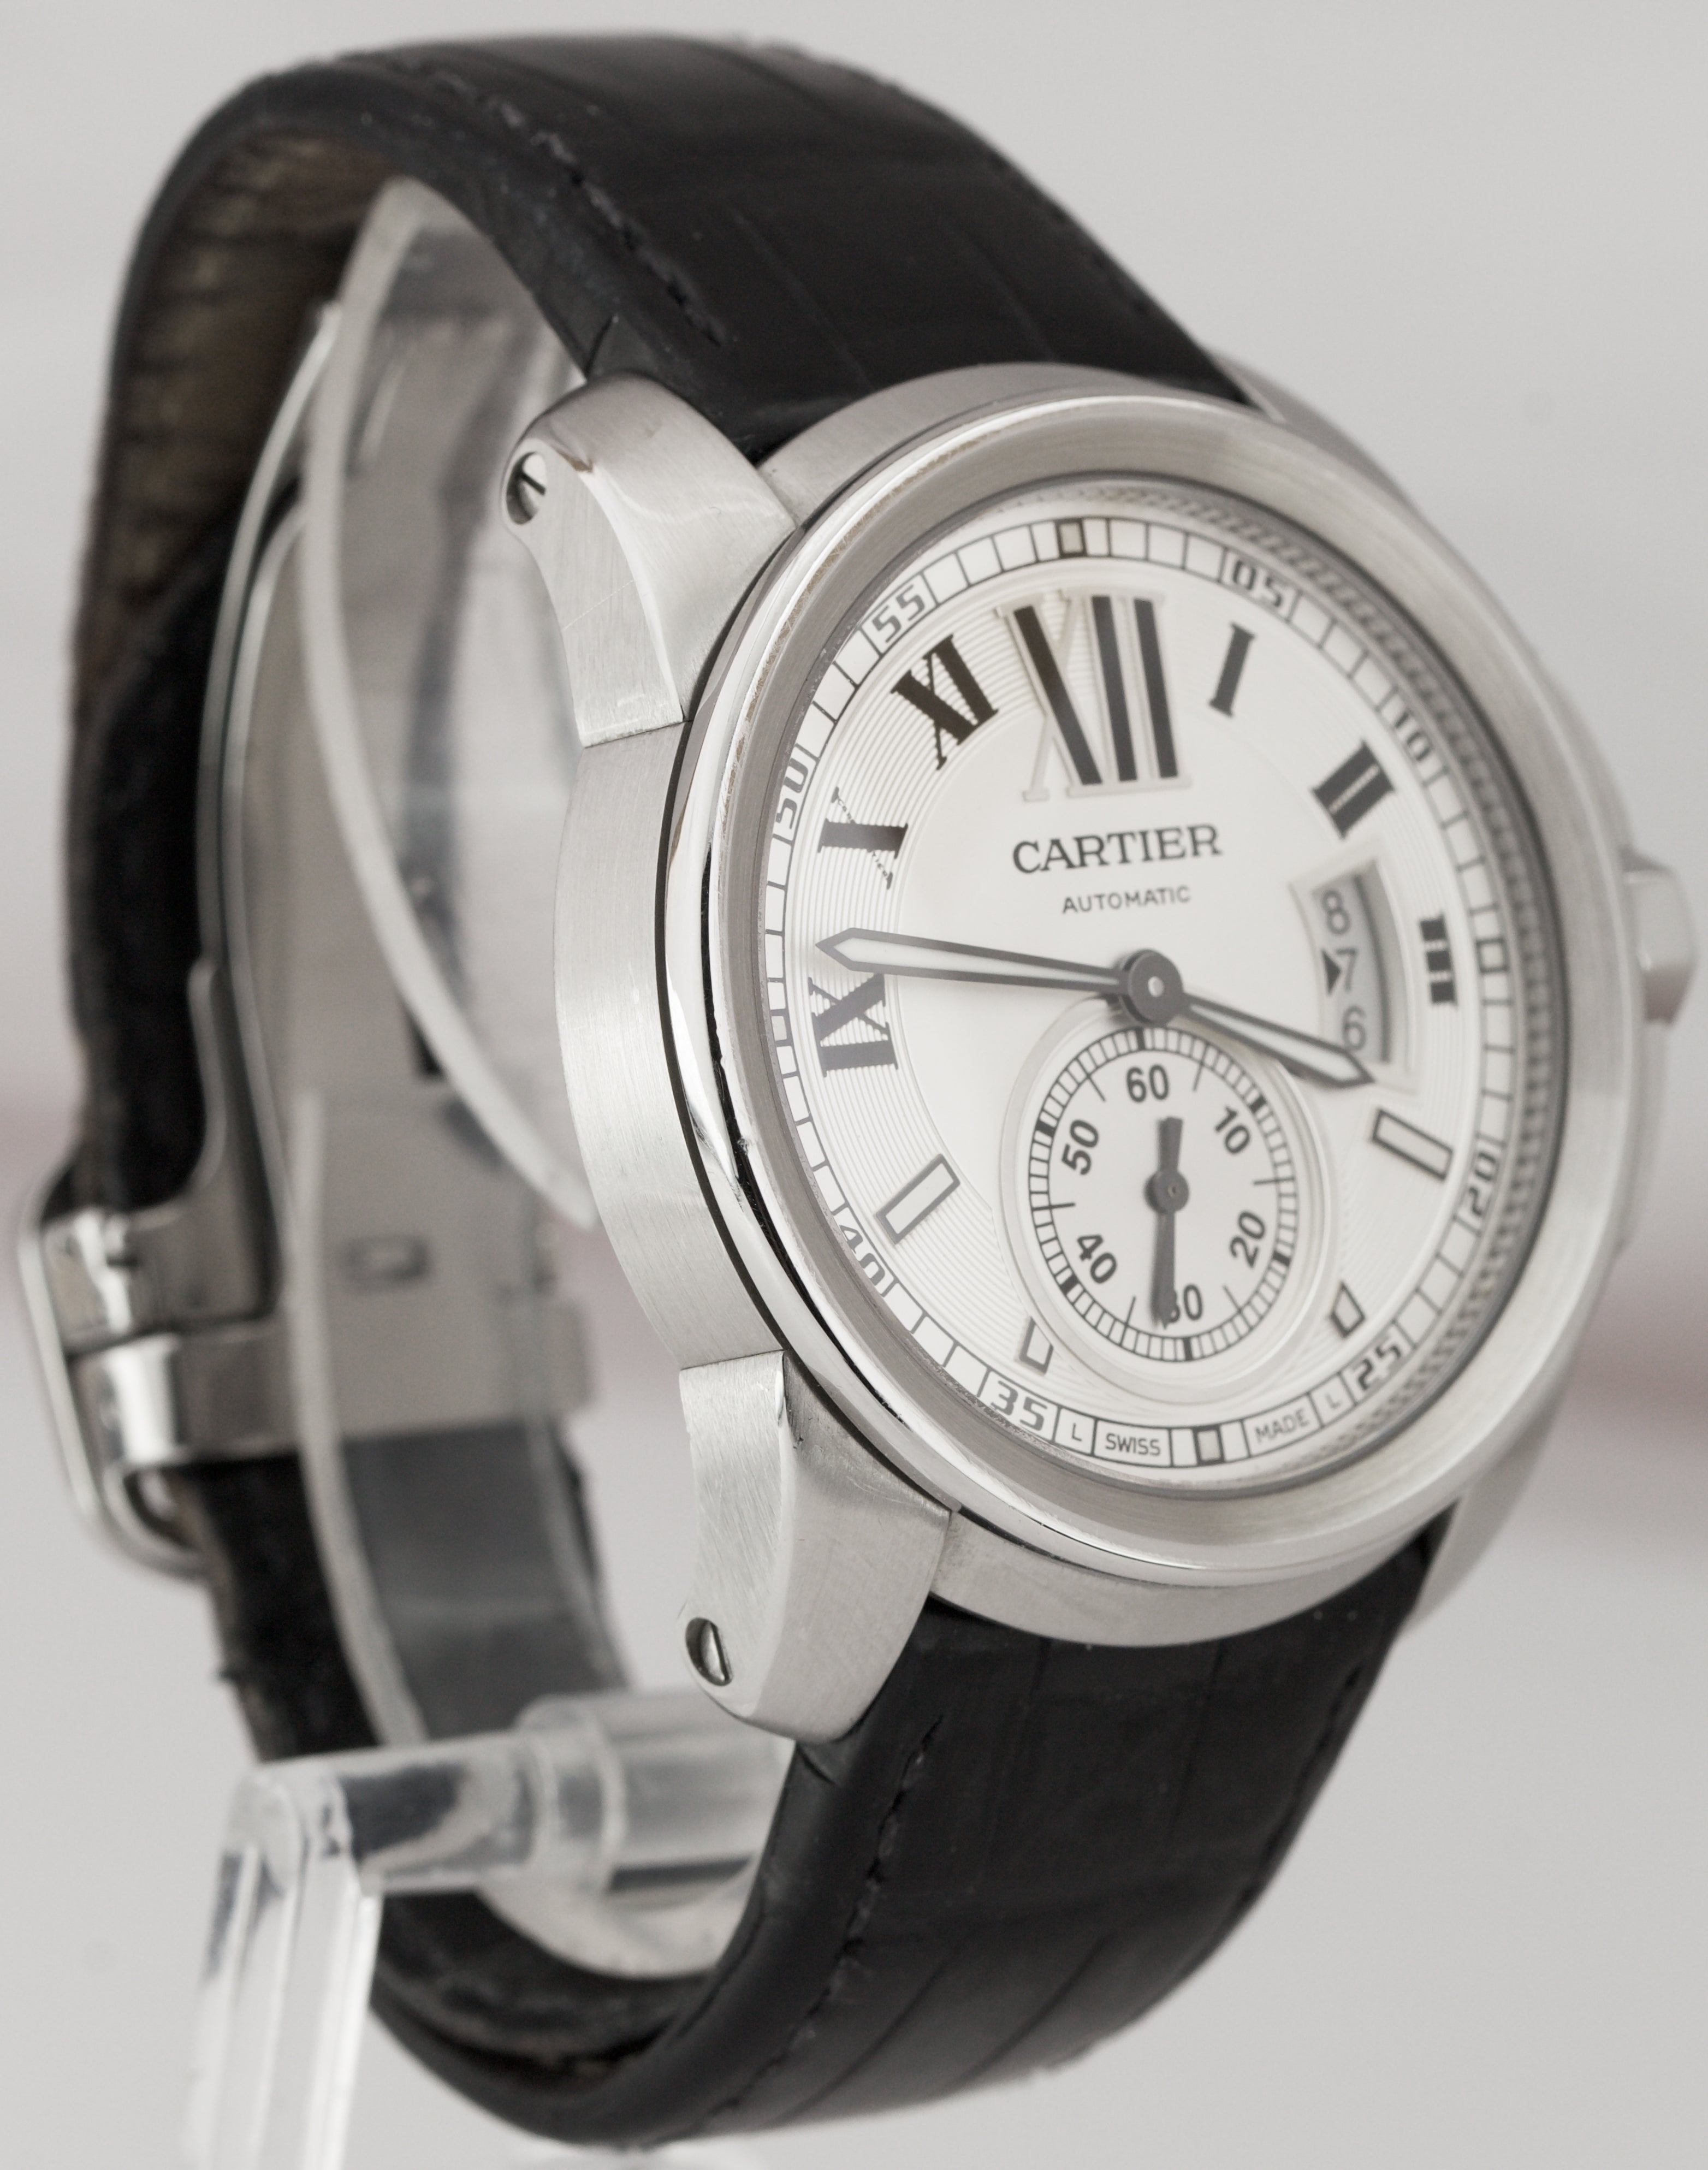 Men's Cartier Calibre Silver Black Roman 42mm Stainless Steel Date Watch 3389